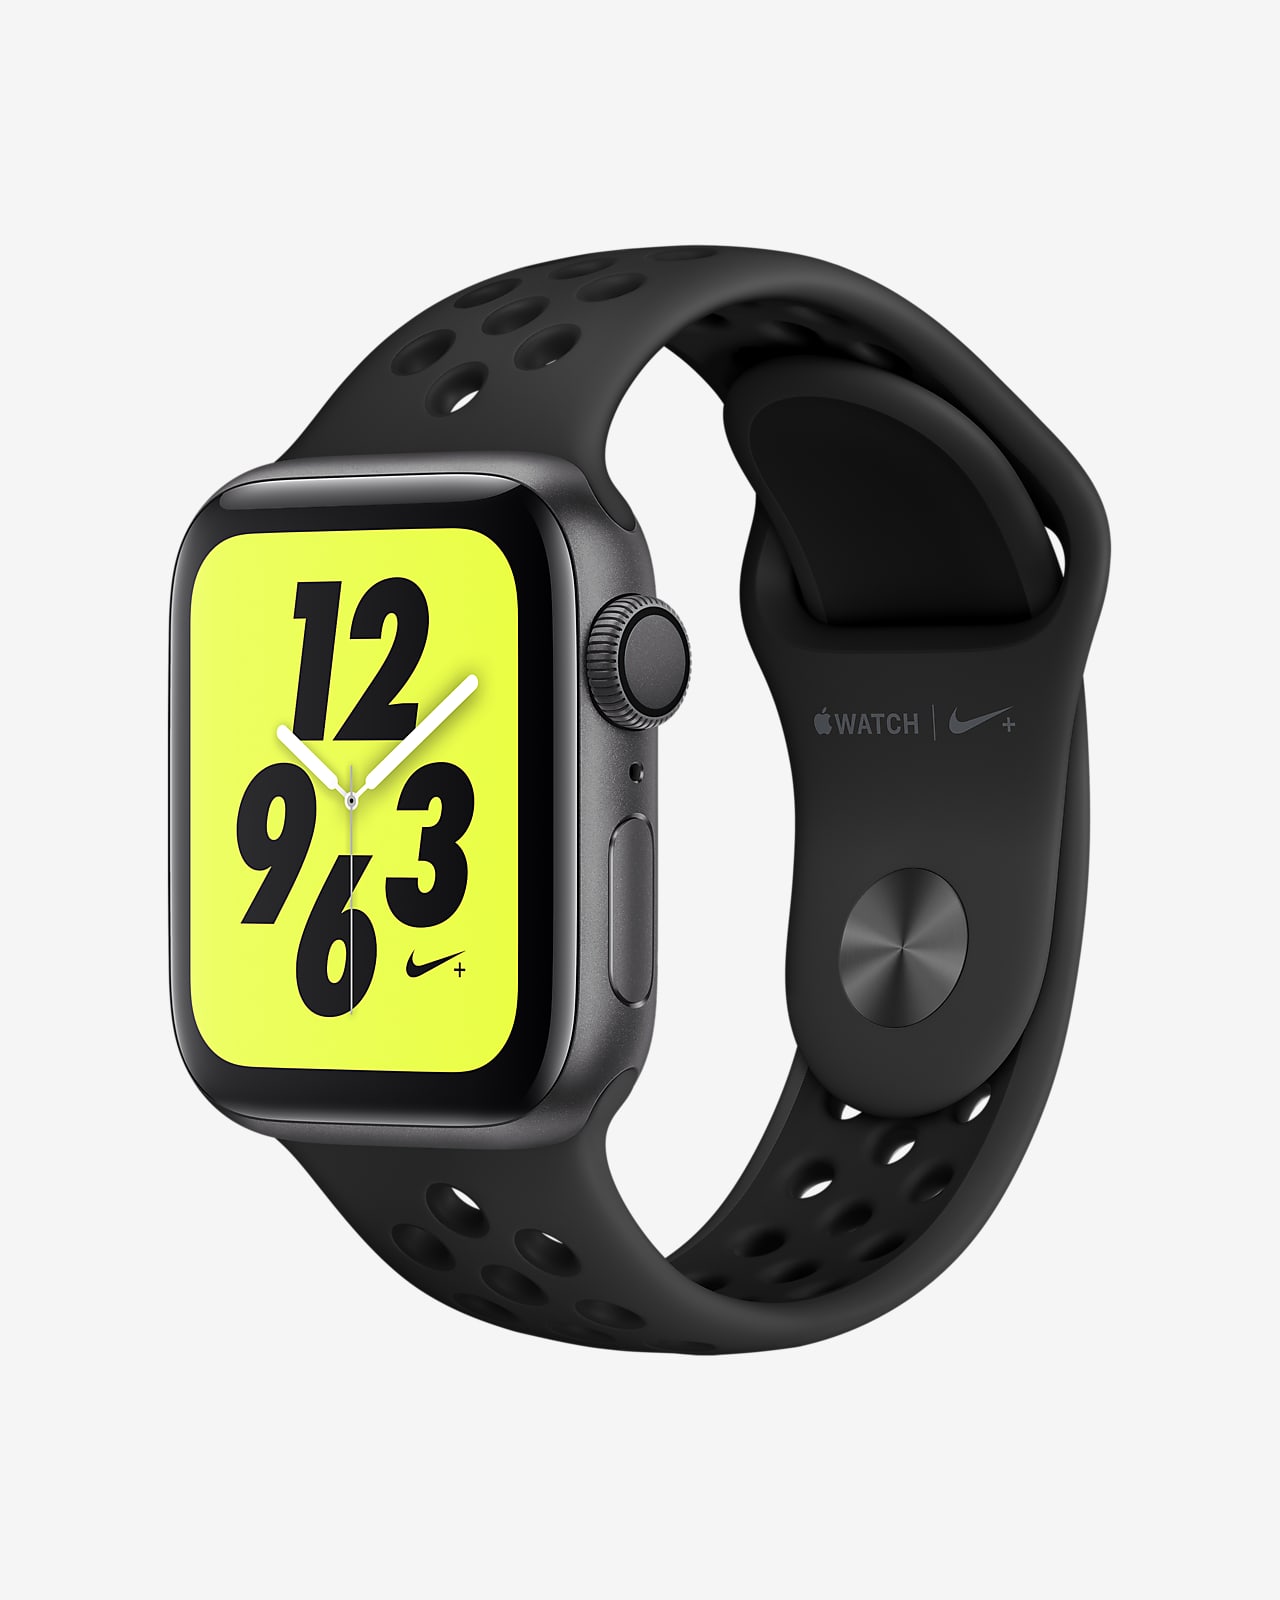 NEW Nike+ Plus GPS Sport Watch White/Silver TomTom Running workout band  runner | eBay